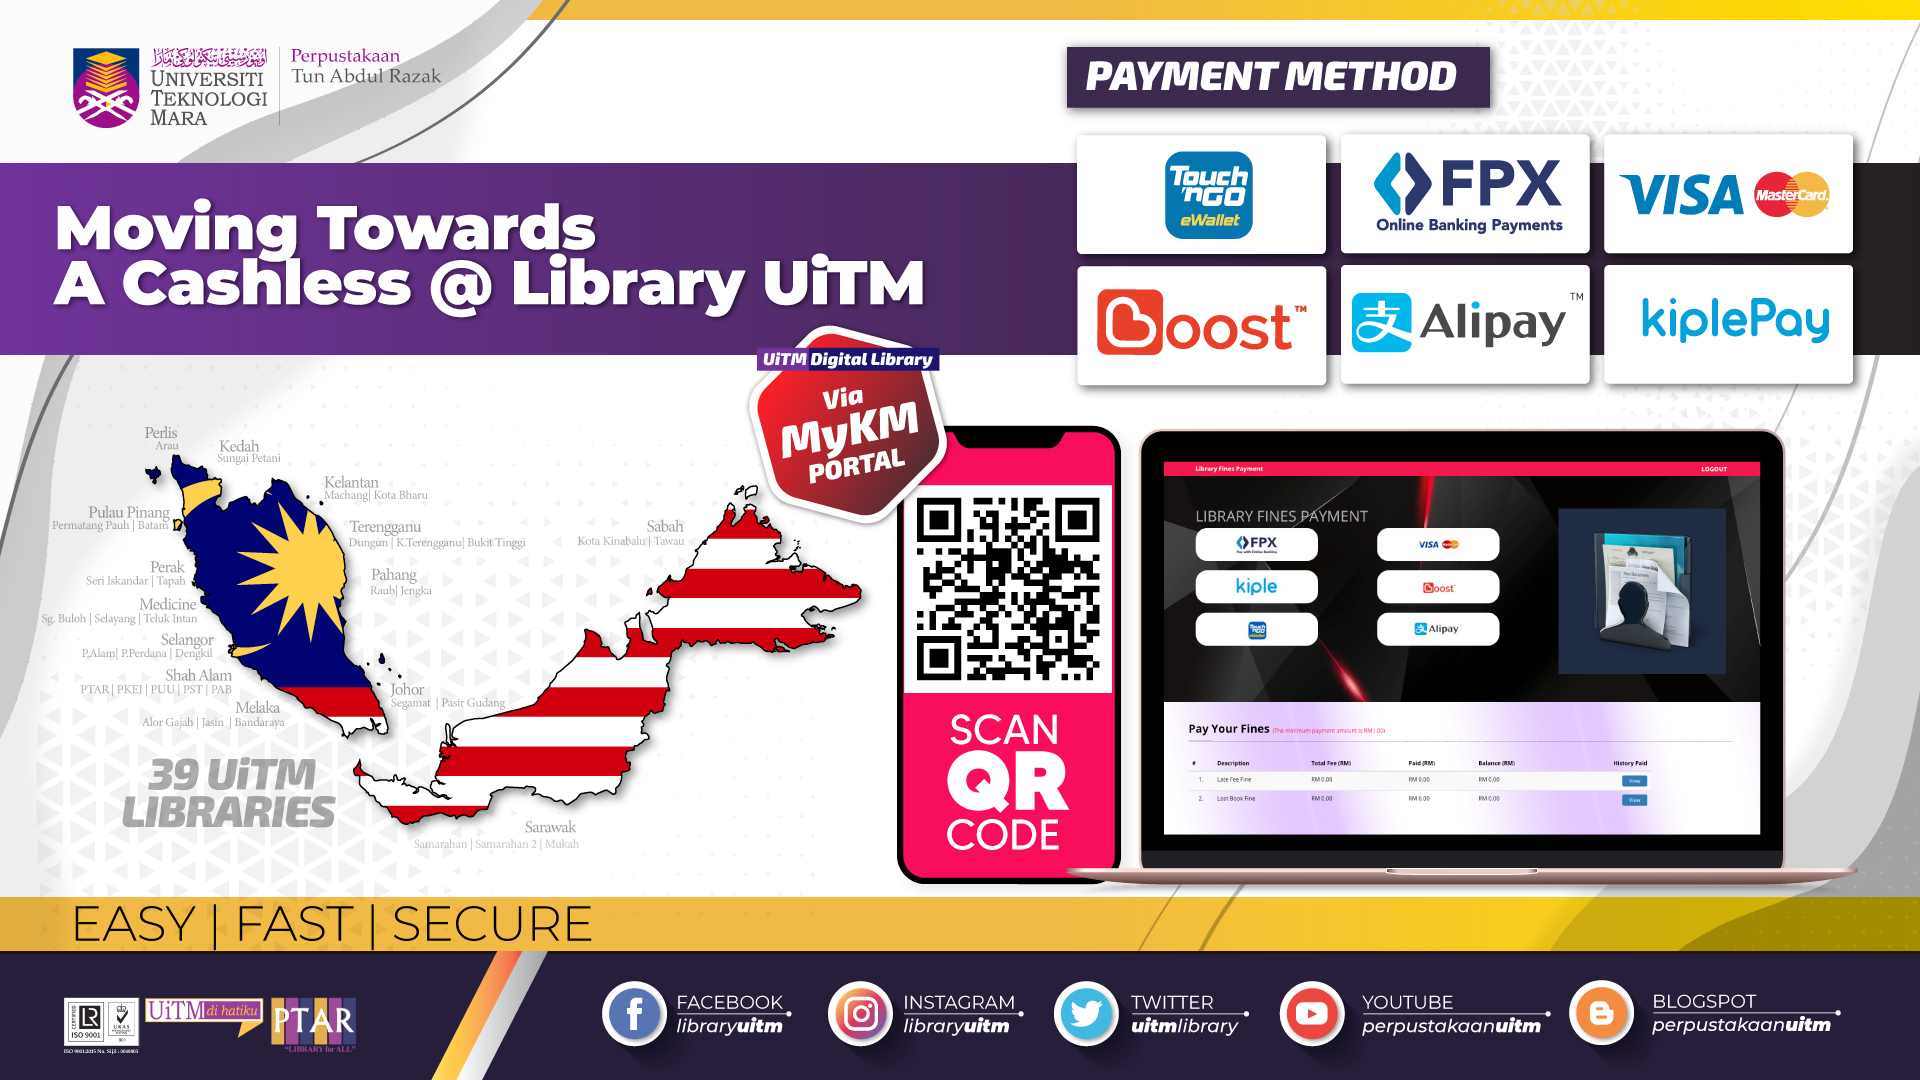 Cashless @ Library UiTM - UiTM Kedah Library